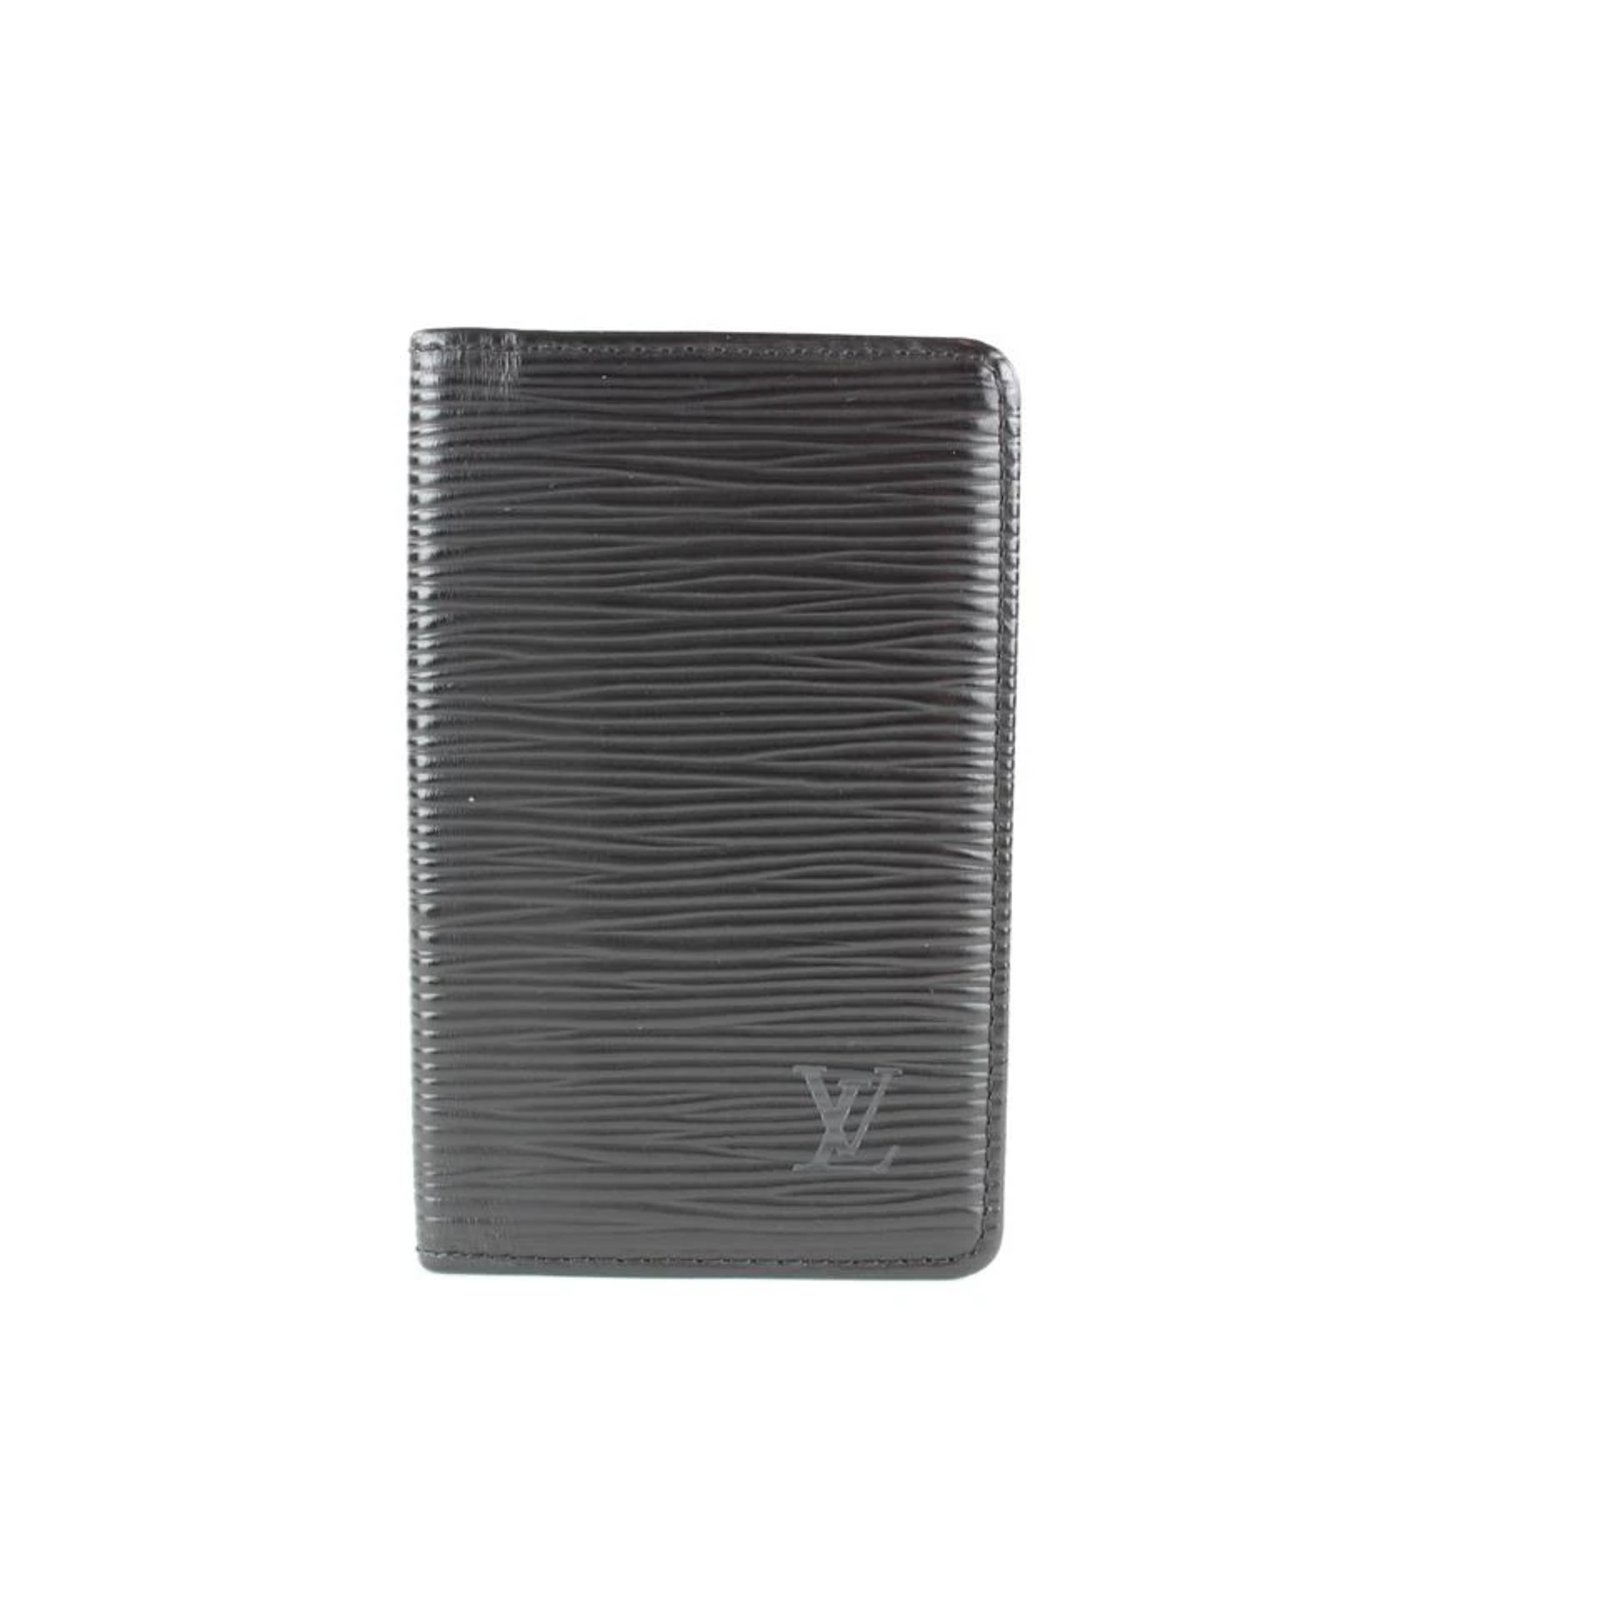 Louis Vuitton Slender Wallet Epi Noir Black in Leather - US